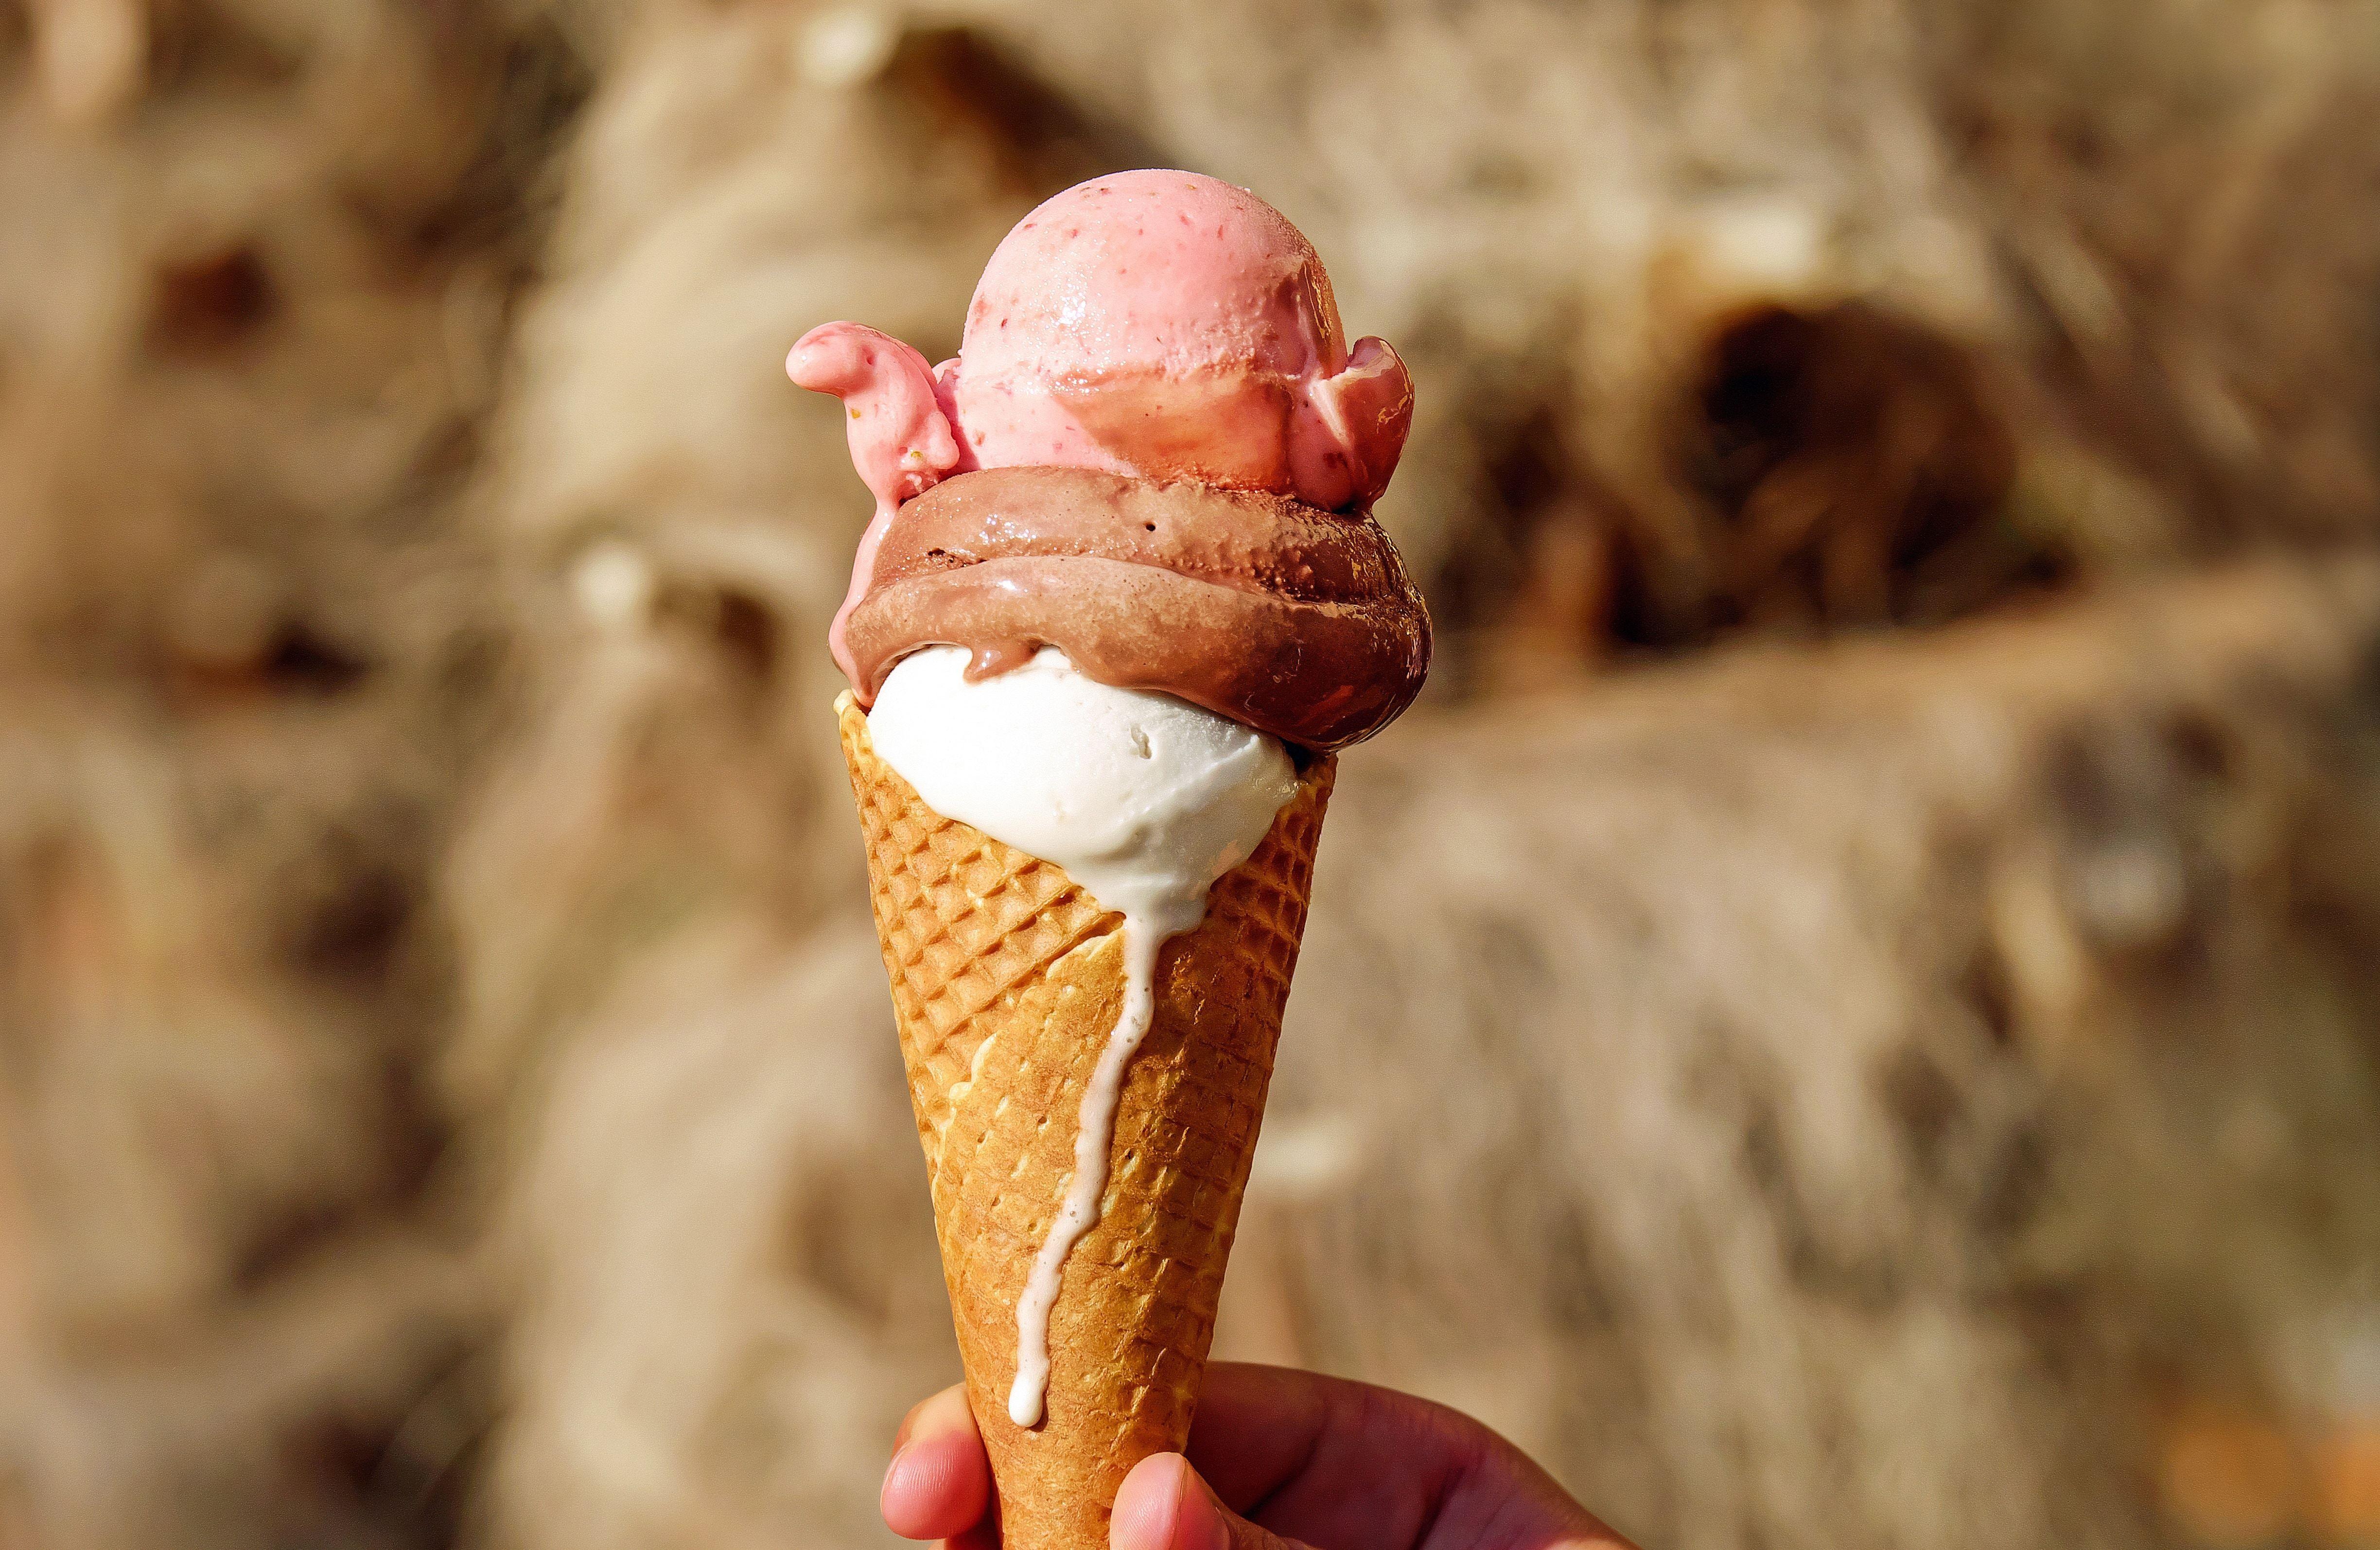 strawberry and chocolate ice cream free image